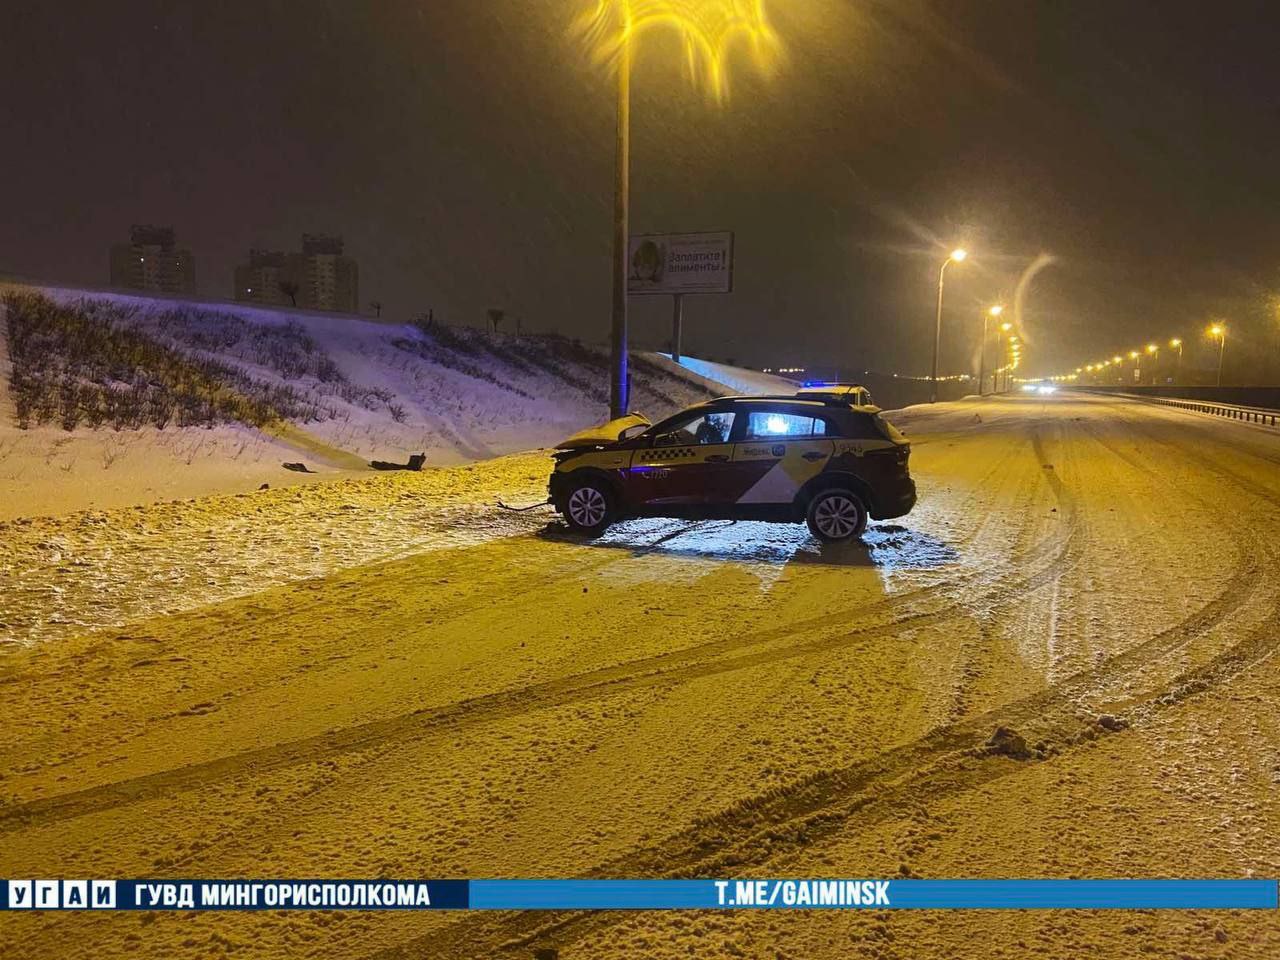 Две аварии с такси произошли в Минске. Пострадал пассажир